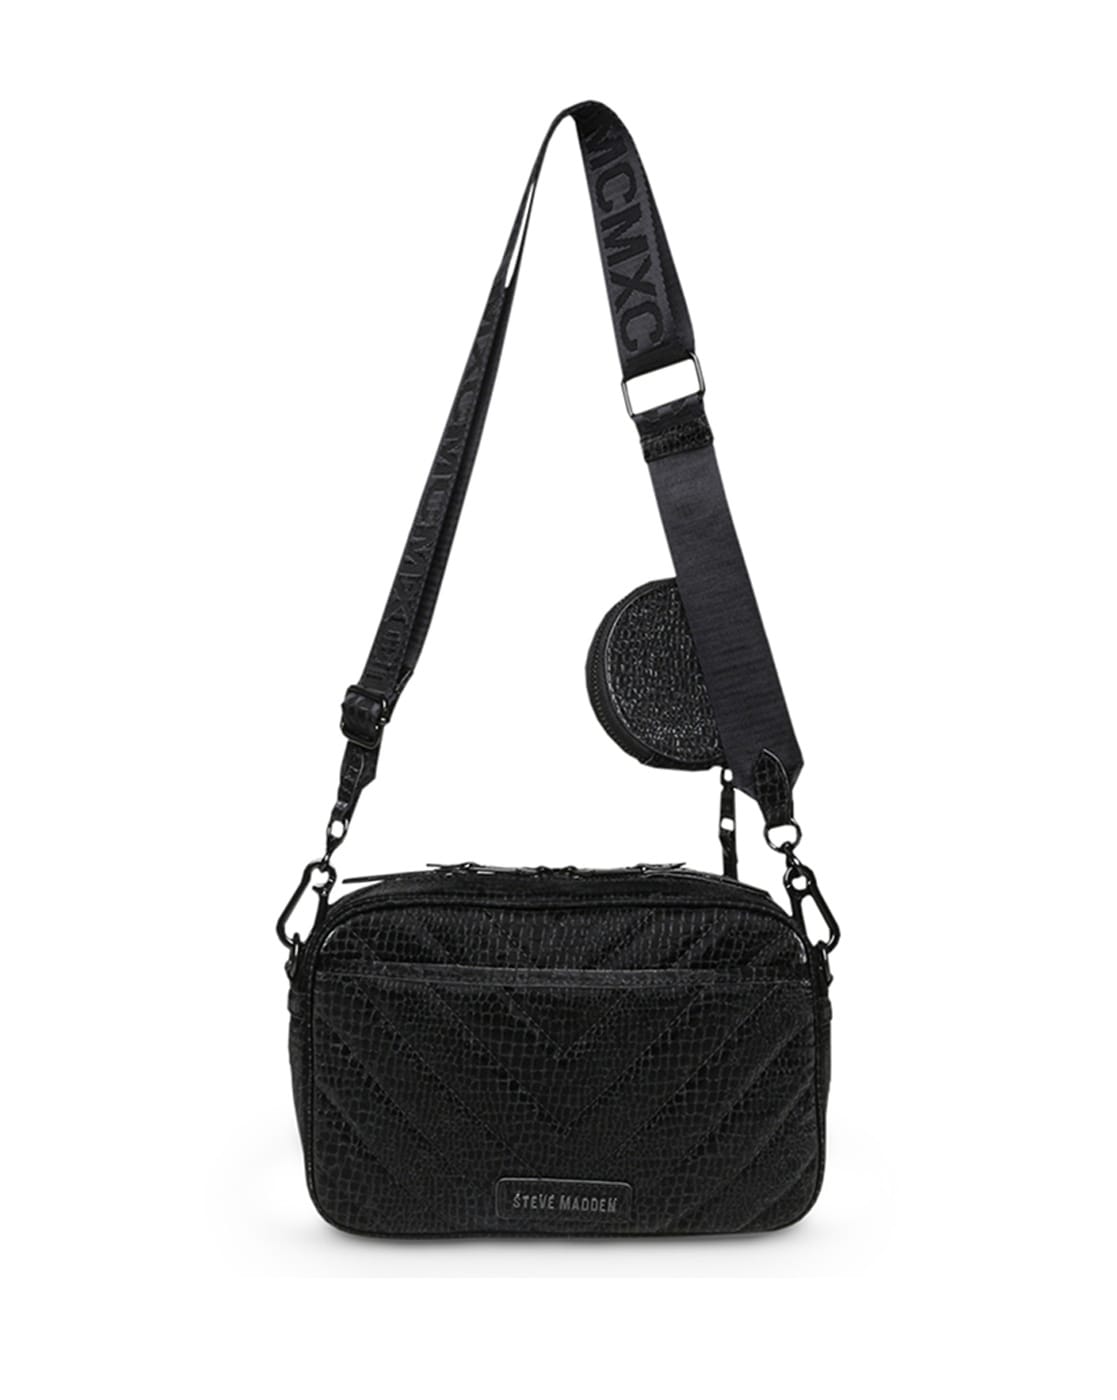 SETH Bag Black | Women's Top Handle Studded Hobo Bag – Steve Madden